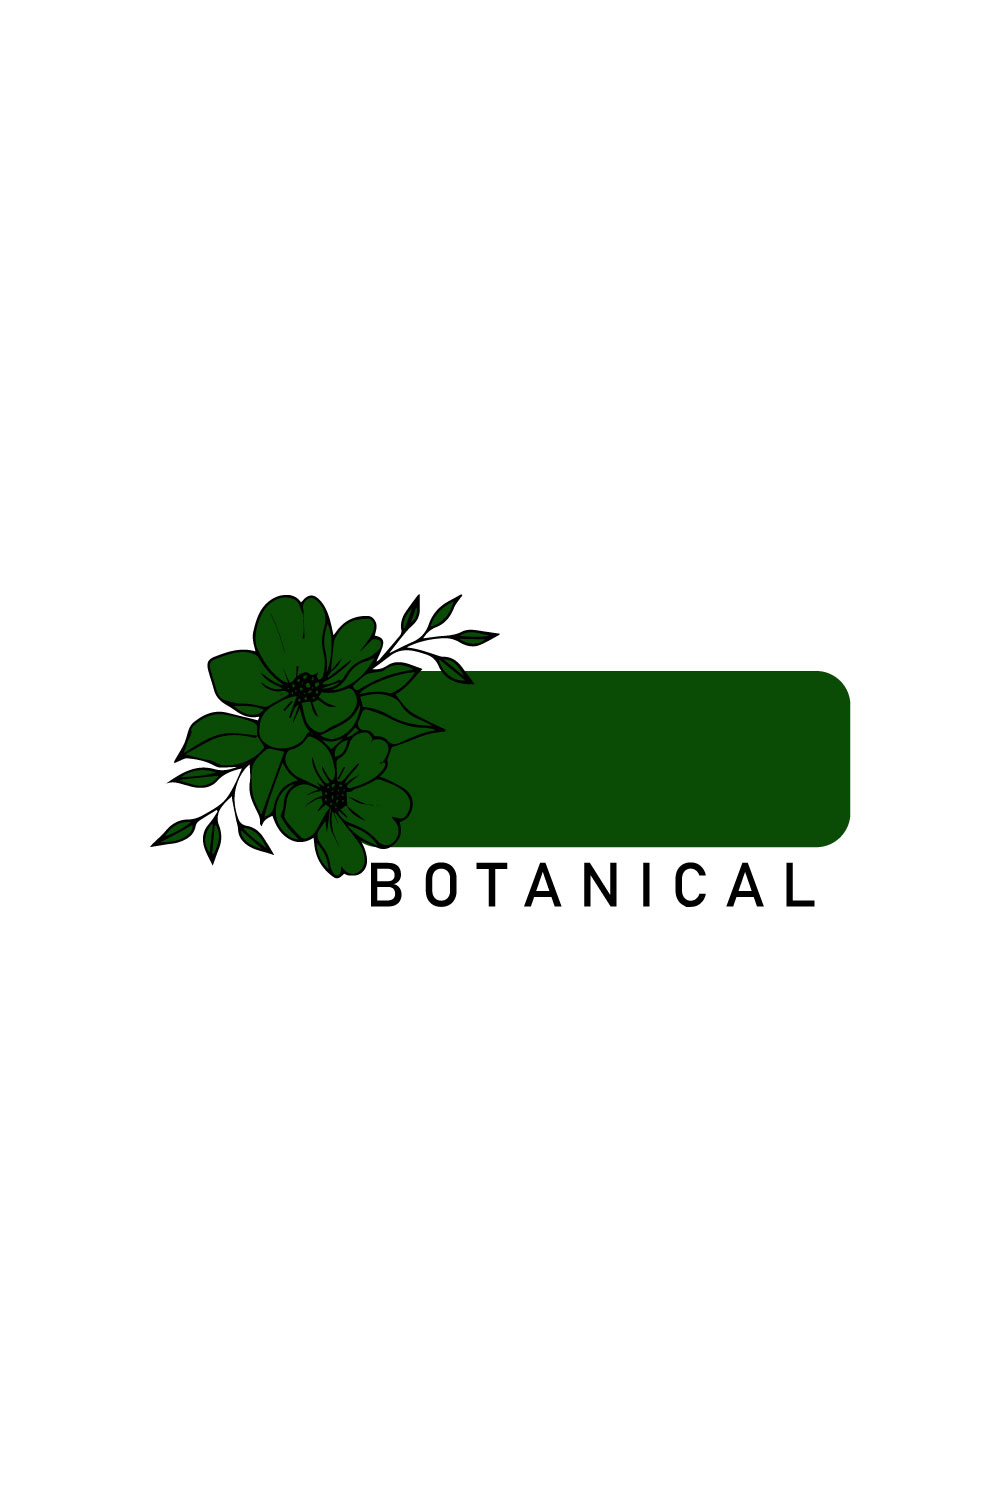 Free vintage botanical logo pinterest preview image.